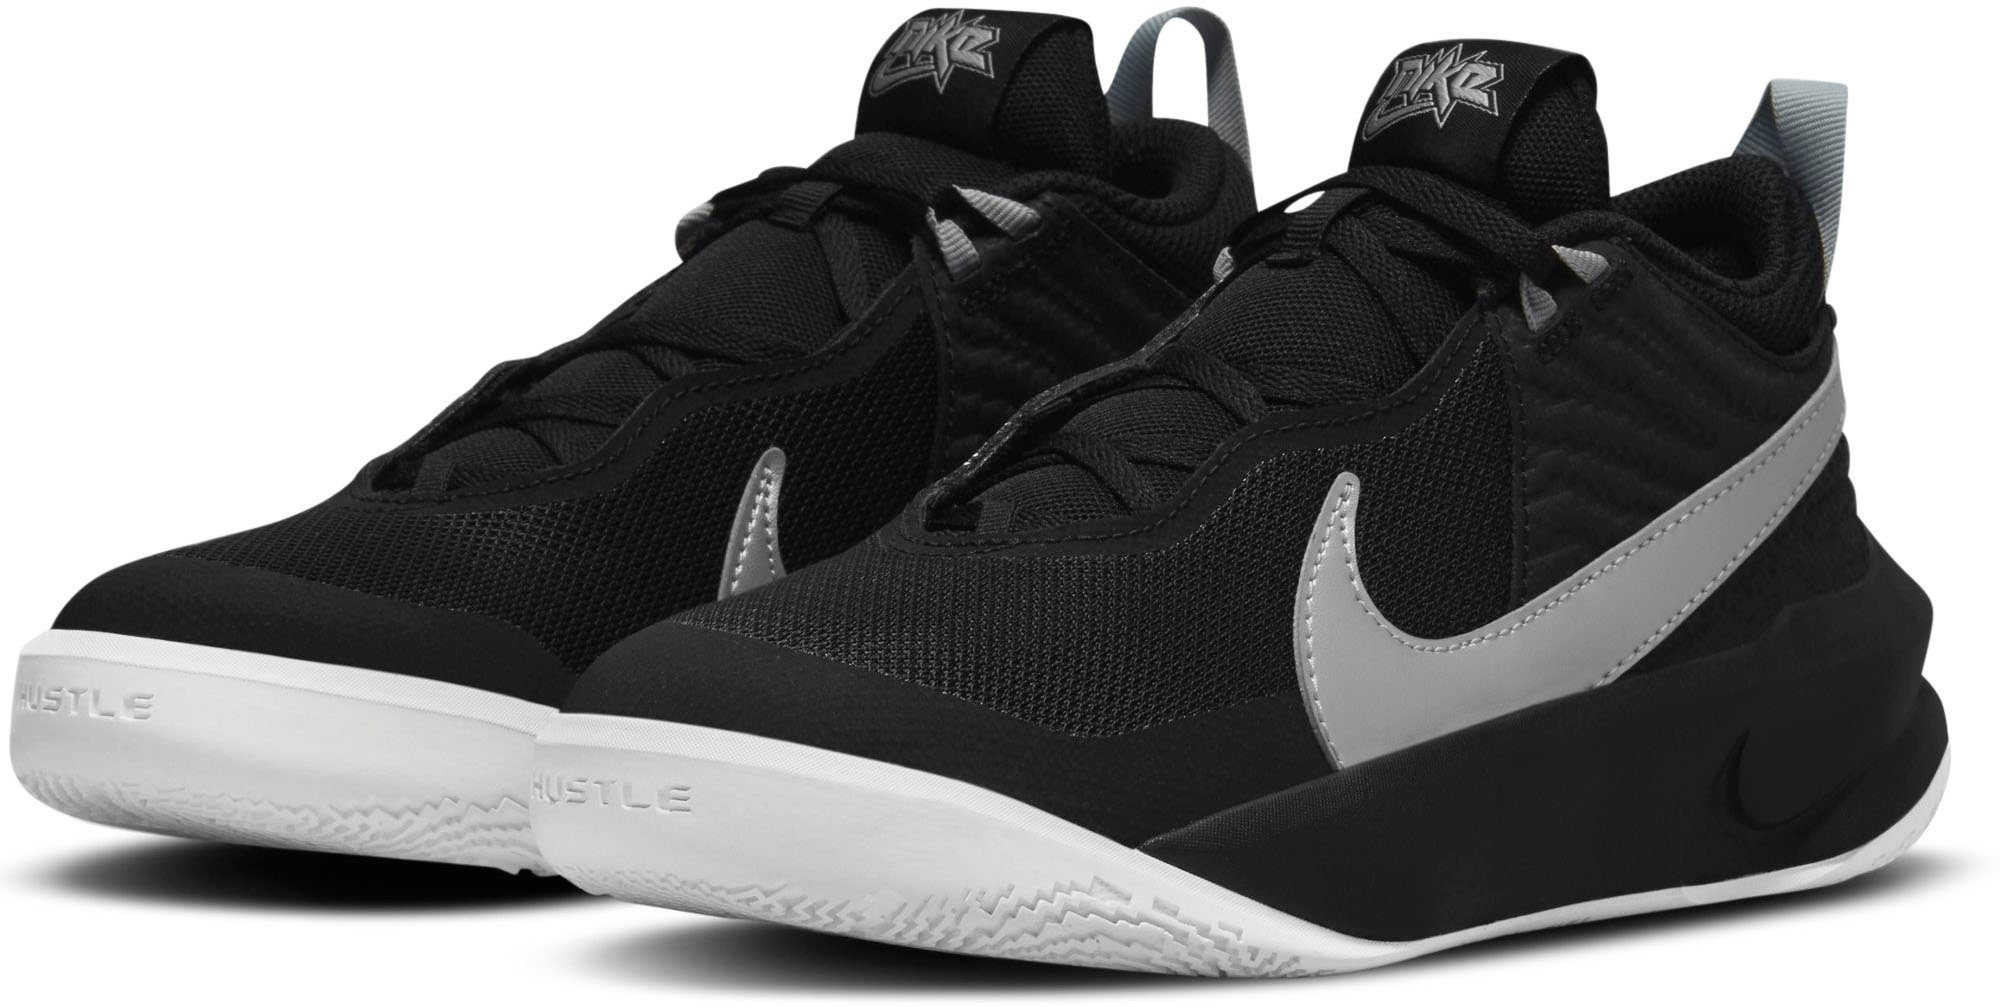 Nike »TEAM HUSTLE D 10« Basketballschuh kaufen | OTTO